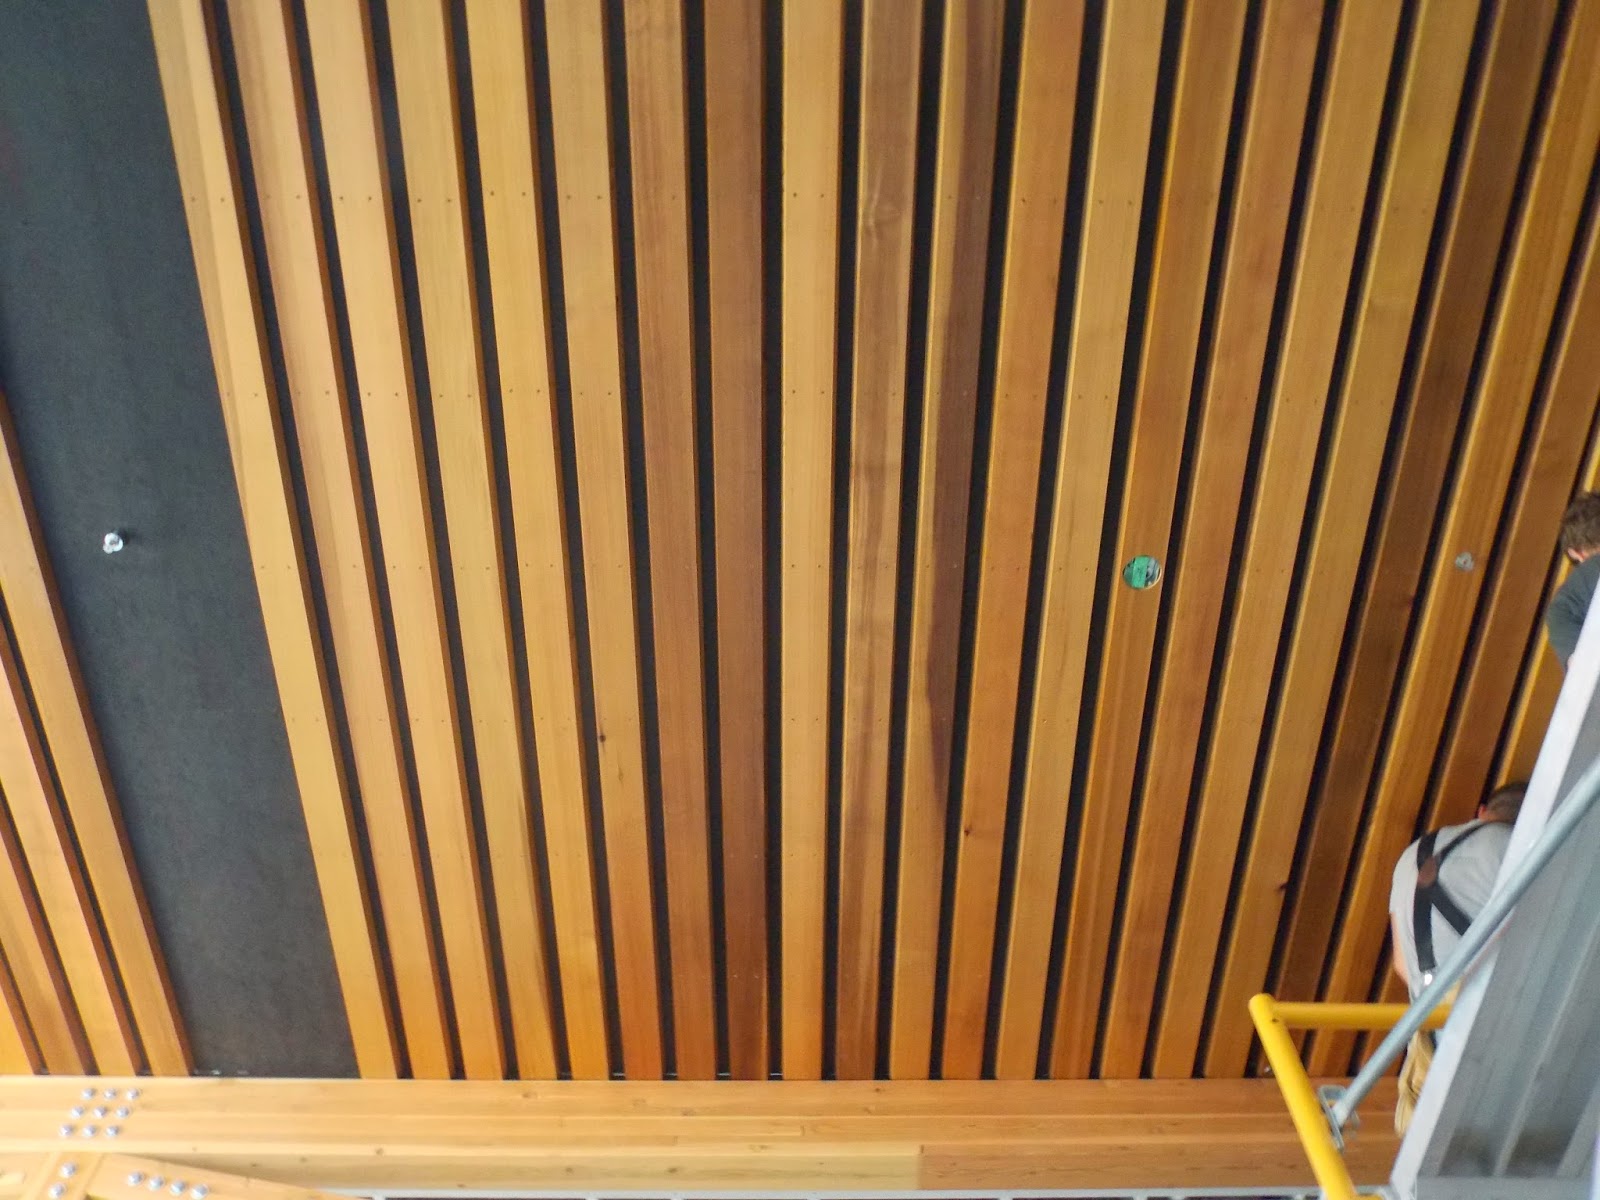 Studio 804 Cedar Plank Ceiling Installation